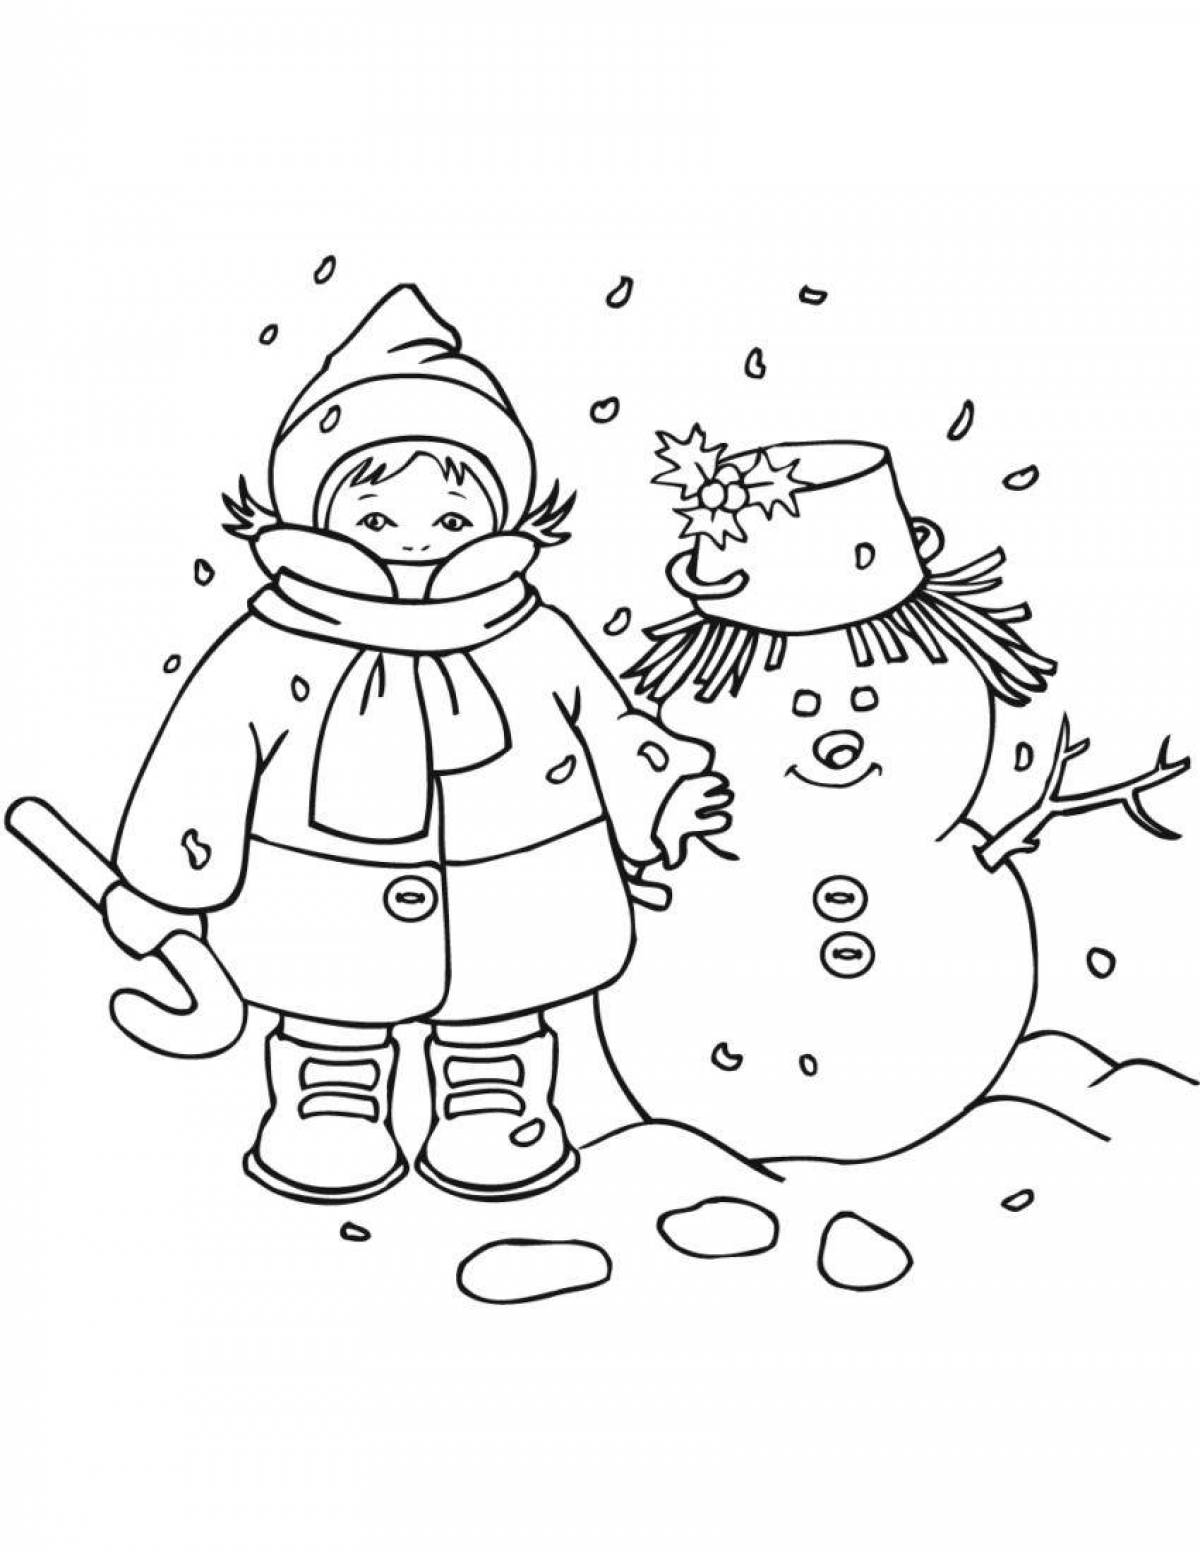 Festive winter coloring book for boys